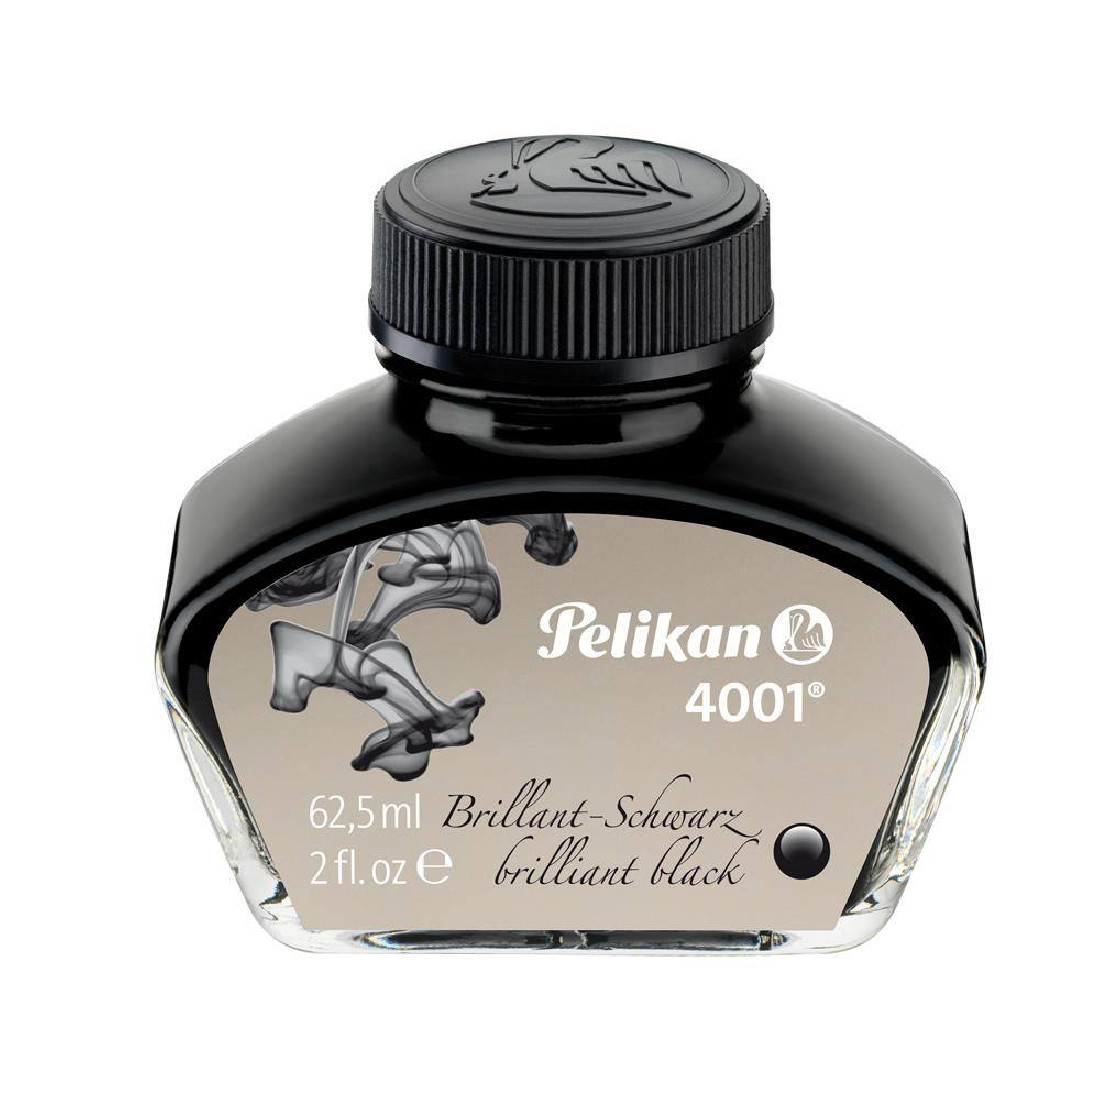 Pelikan 4001 Brilliant Black 62,5ml  Fountain pen ink